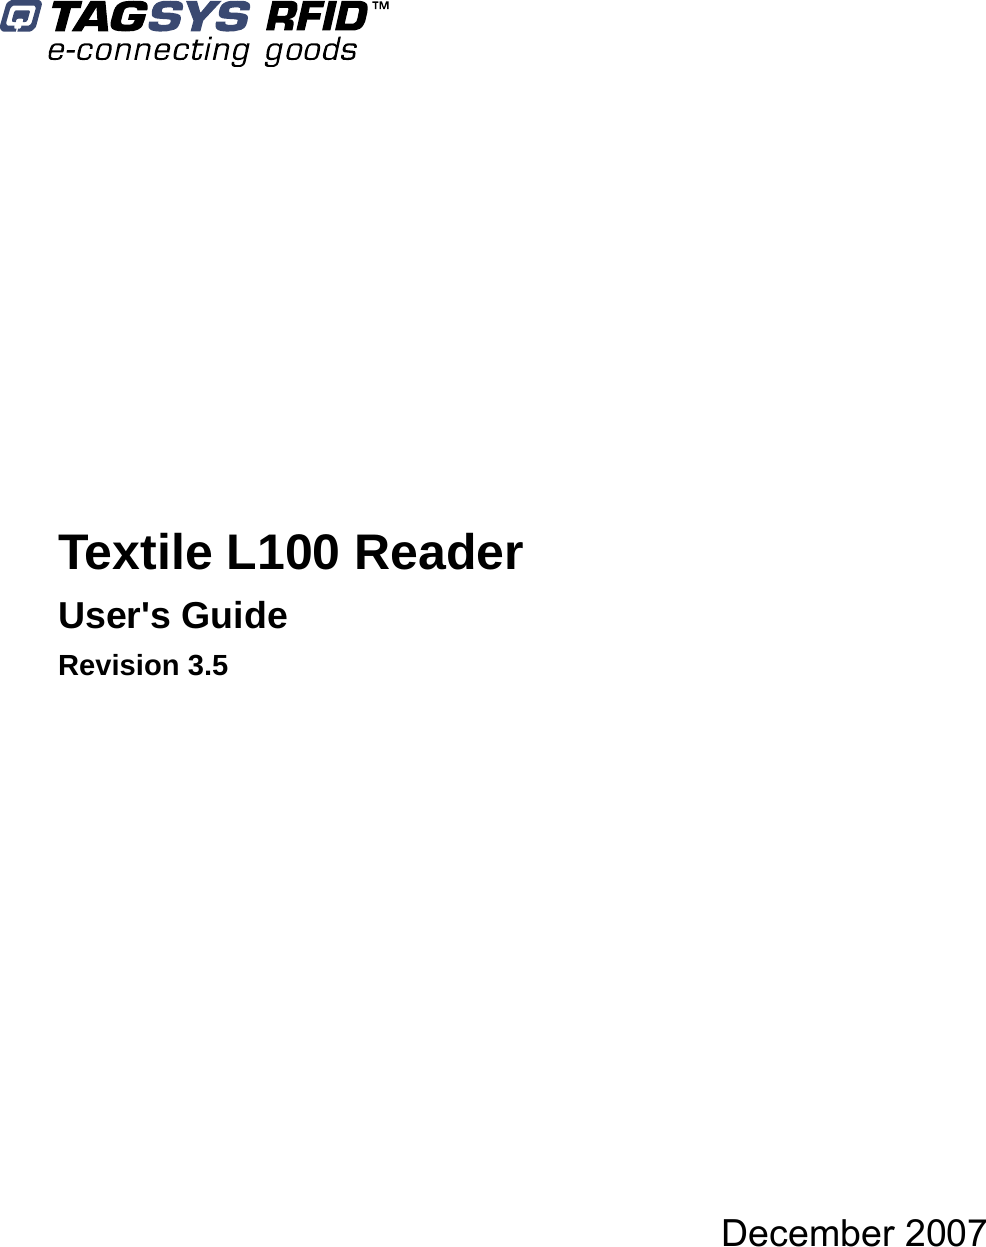               Textile L100 Reader User&apos;s Guide Revision 3.5              December 2007  